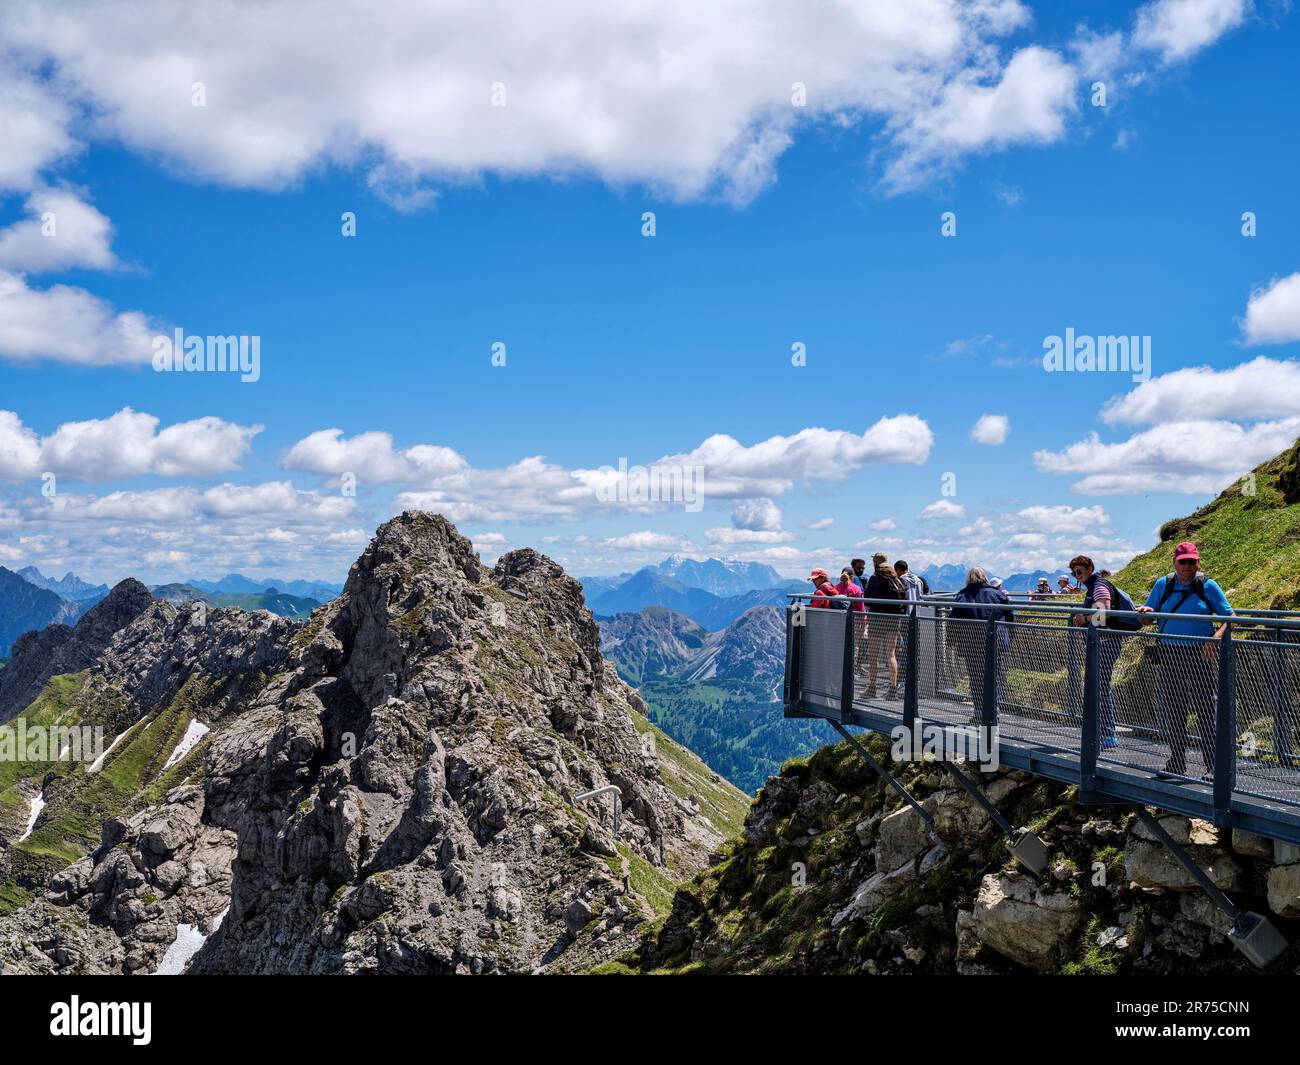 Nordwandsteig, Nebelhorn summit, Oberstdorf, Allgaeu, Bavaria